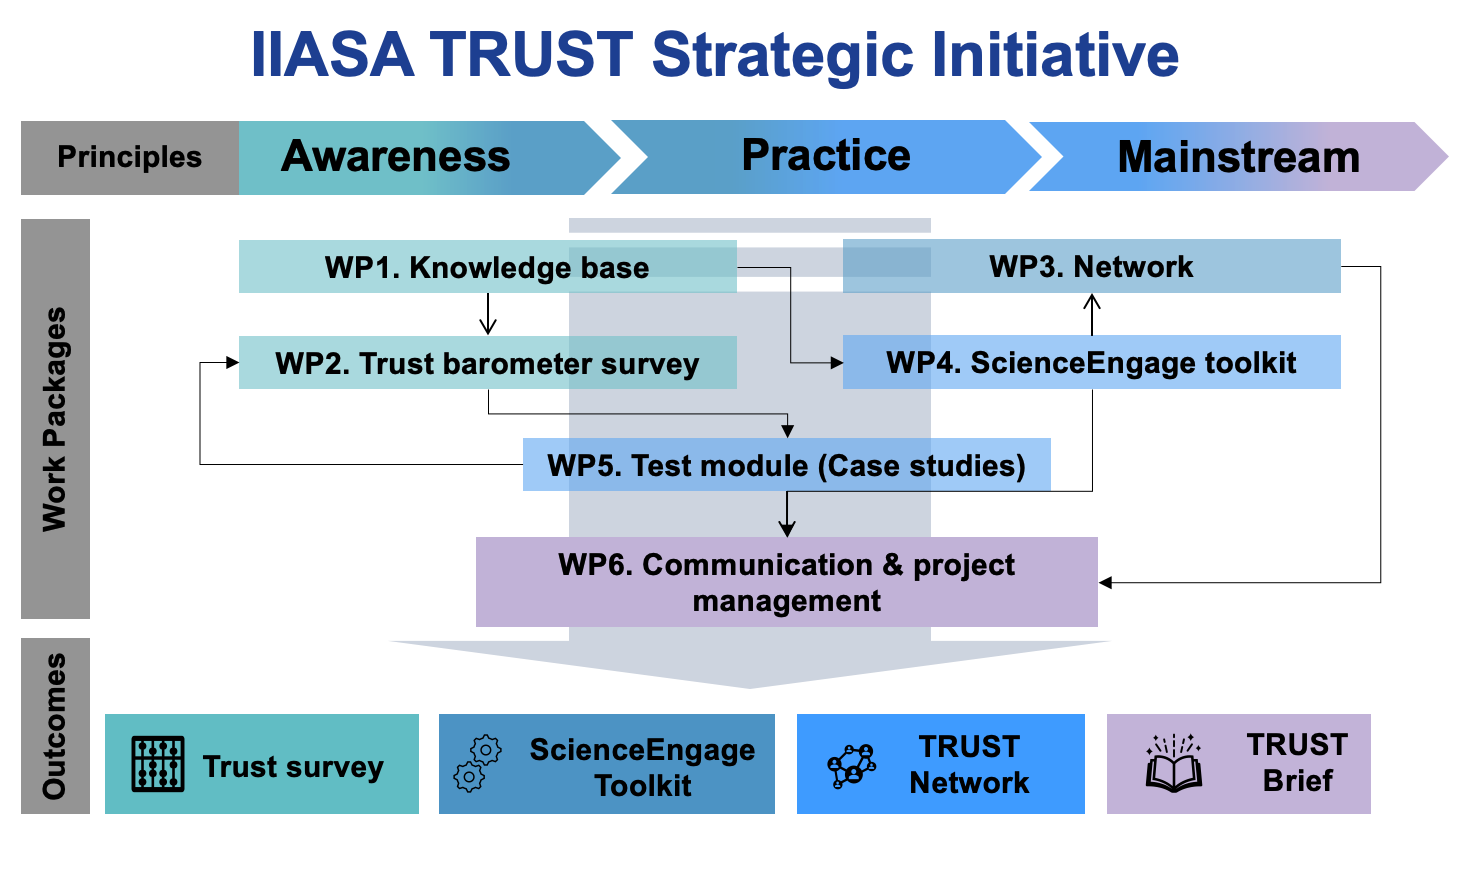 IIASA TRUST Strategic Initiative: Overview